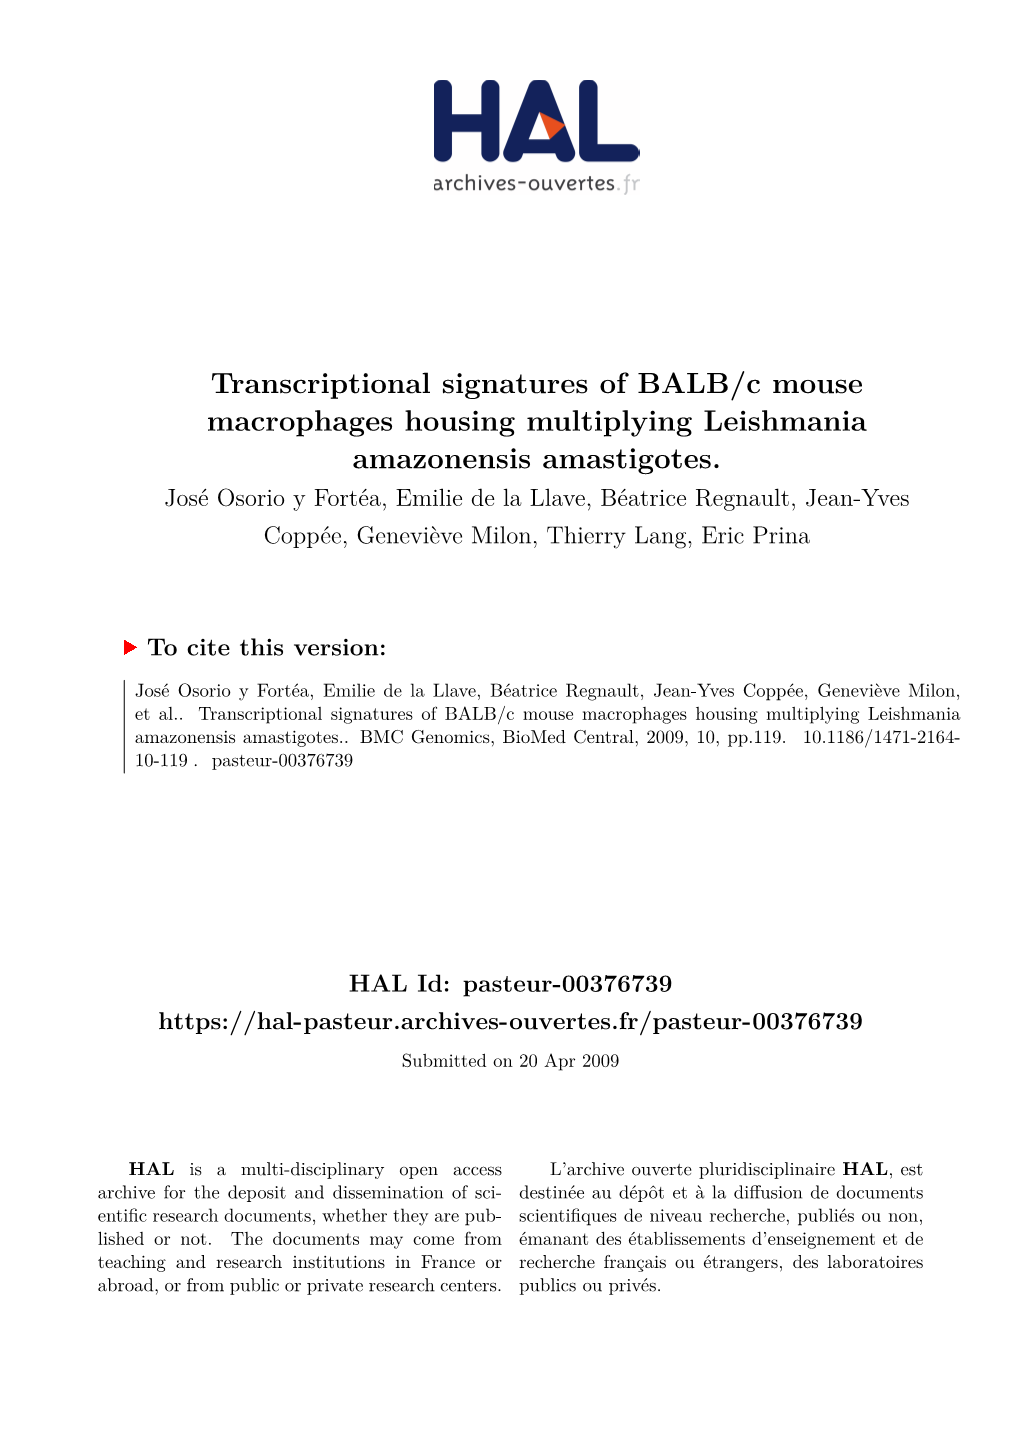 Transcriptional Signatures of BALB/C Mouse Macrophages Housing Multiplying Leishmania Amazonensis Amastigotes